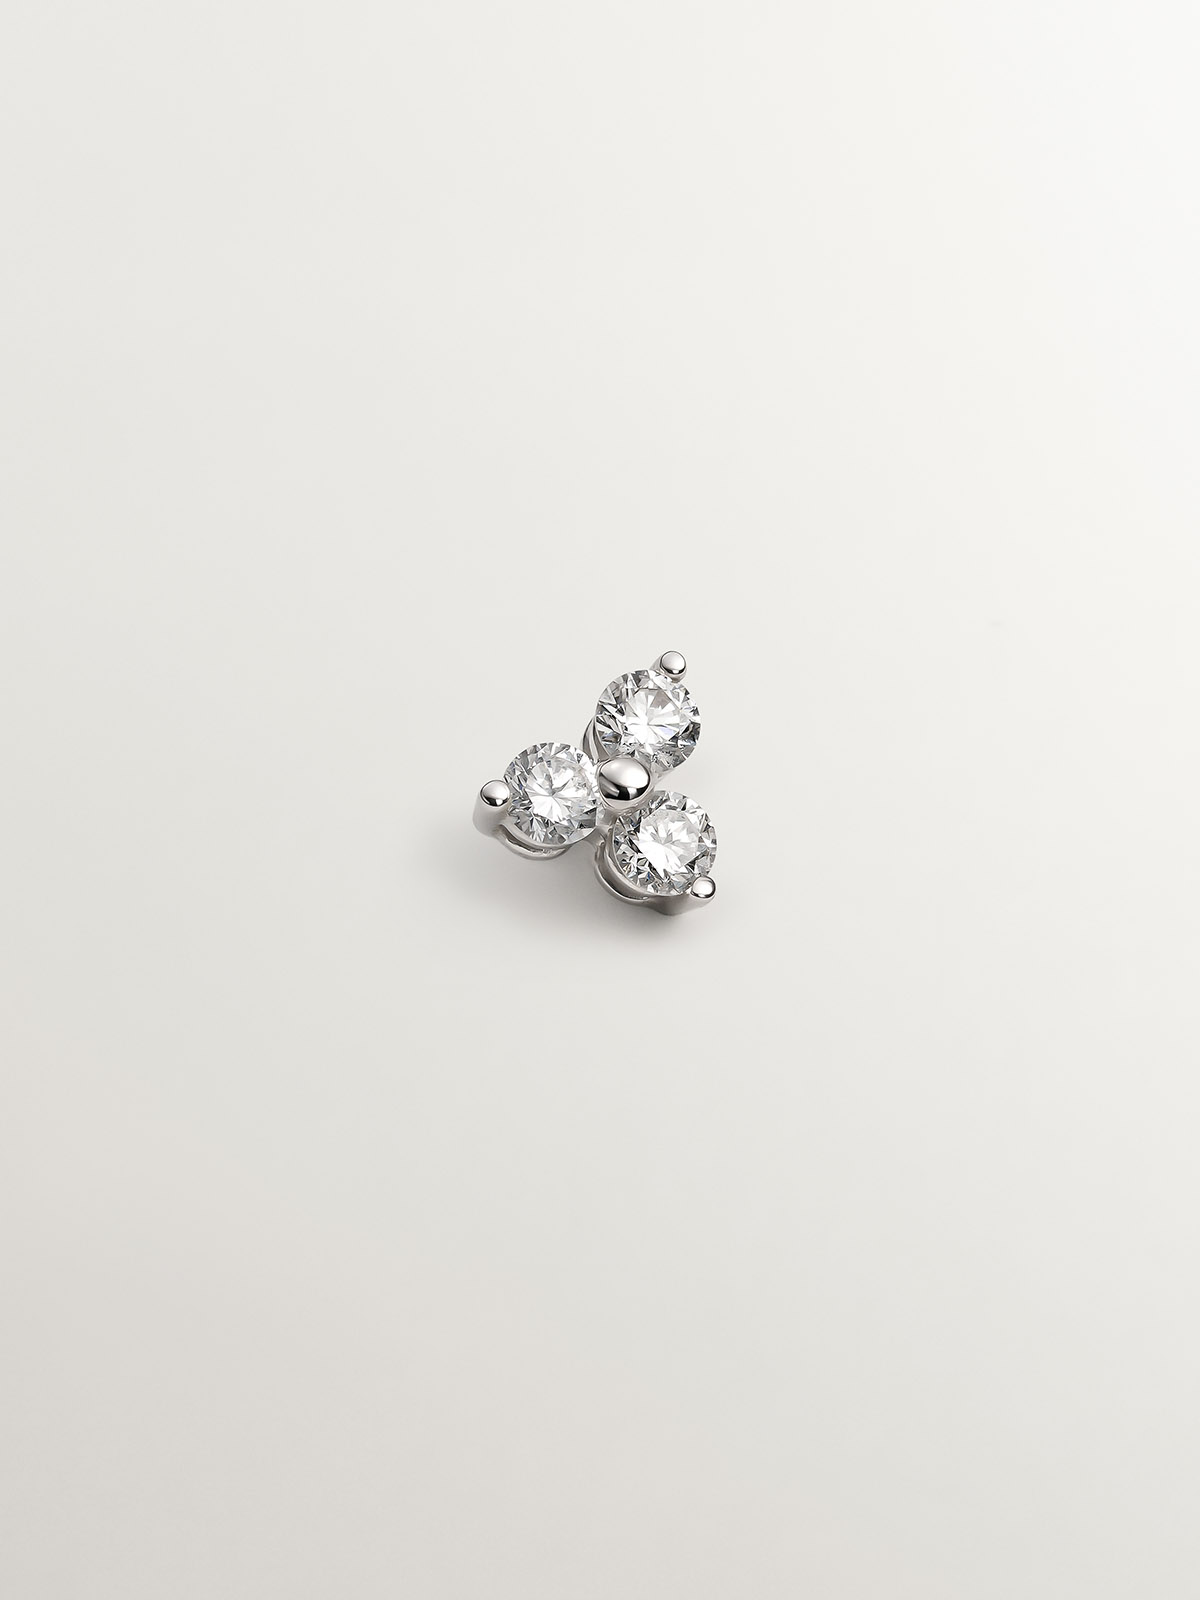 Single 18K white gold earring with diamond clover.